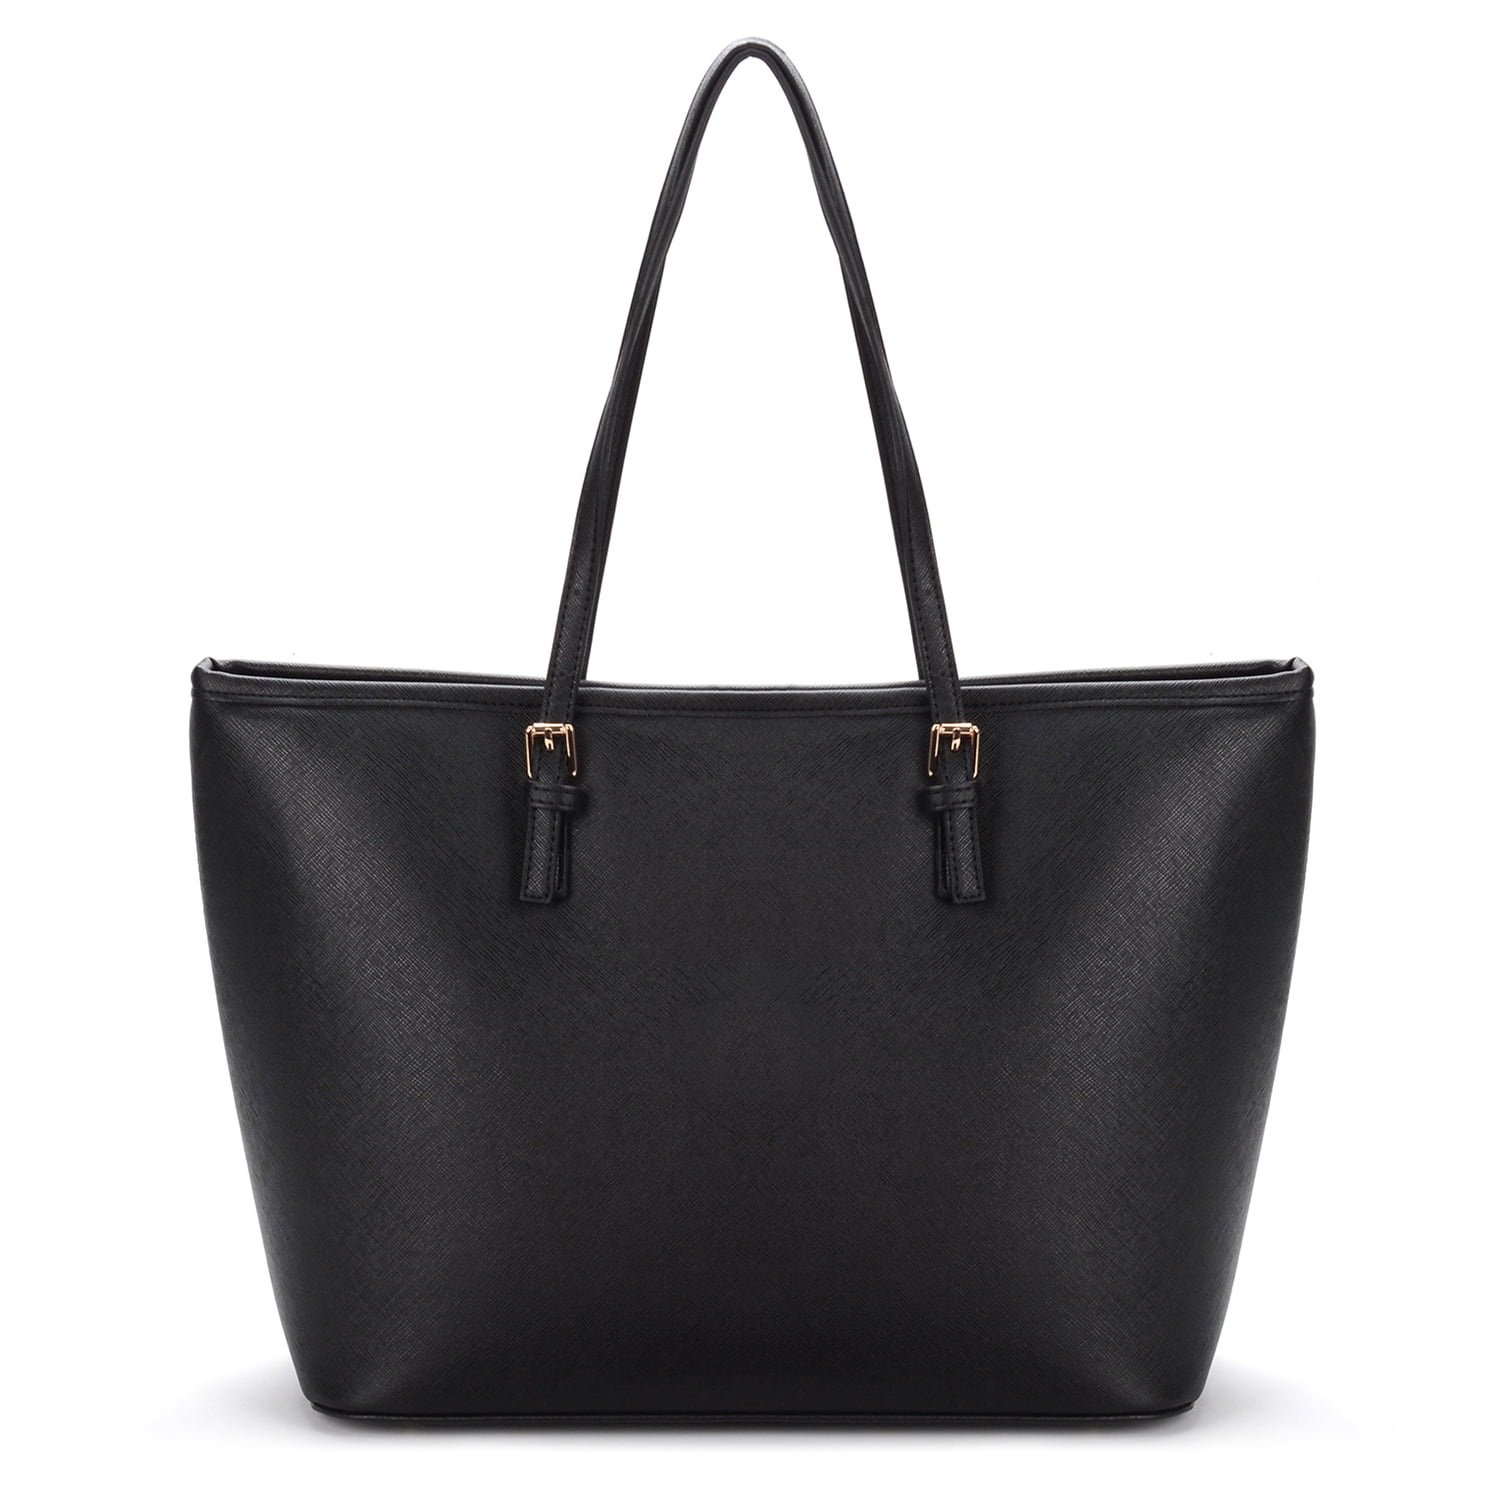 Ladies Handbag Tote Simple Casual Large Shoulder Bag Top Handle Handbag ...